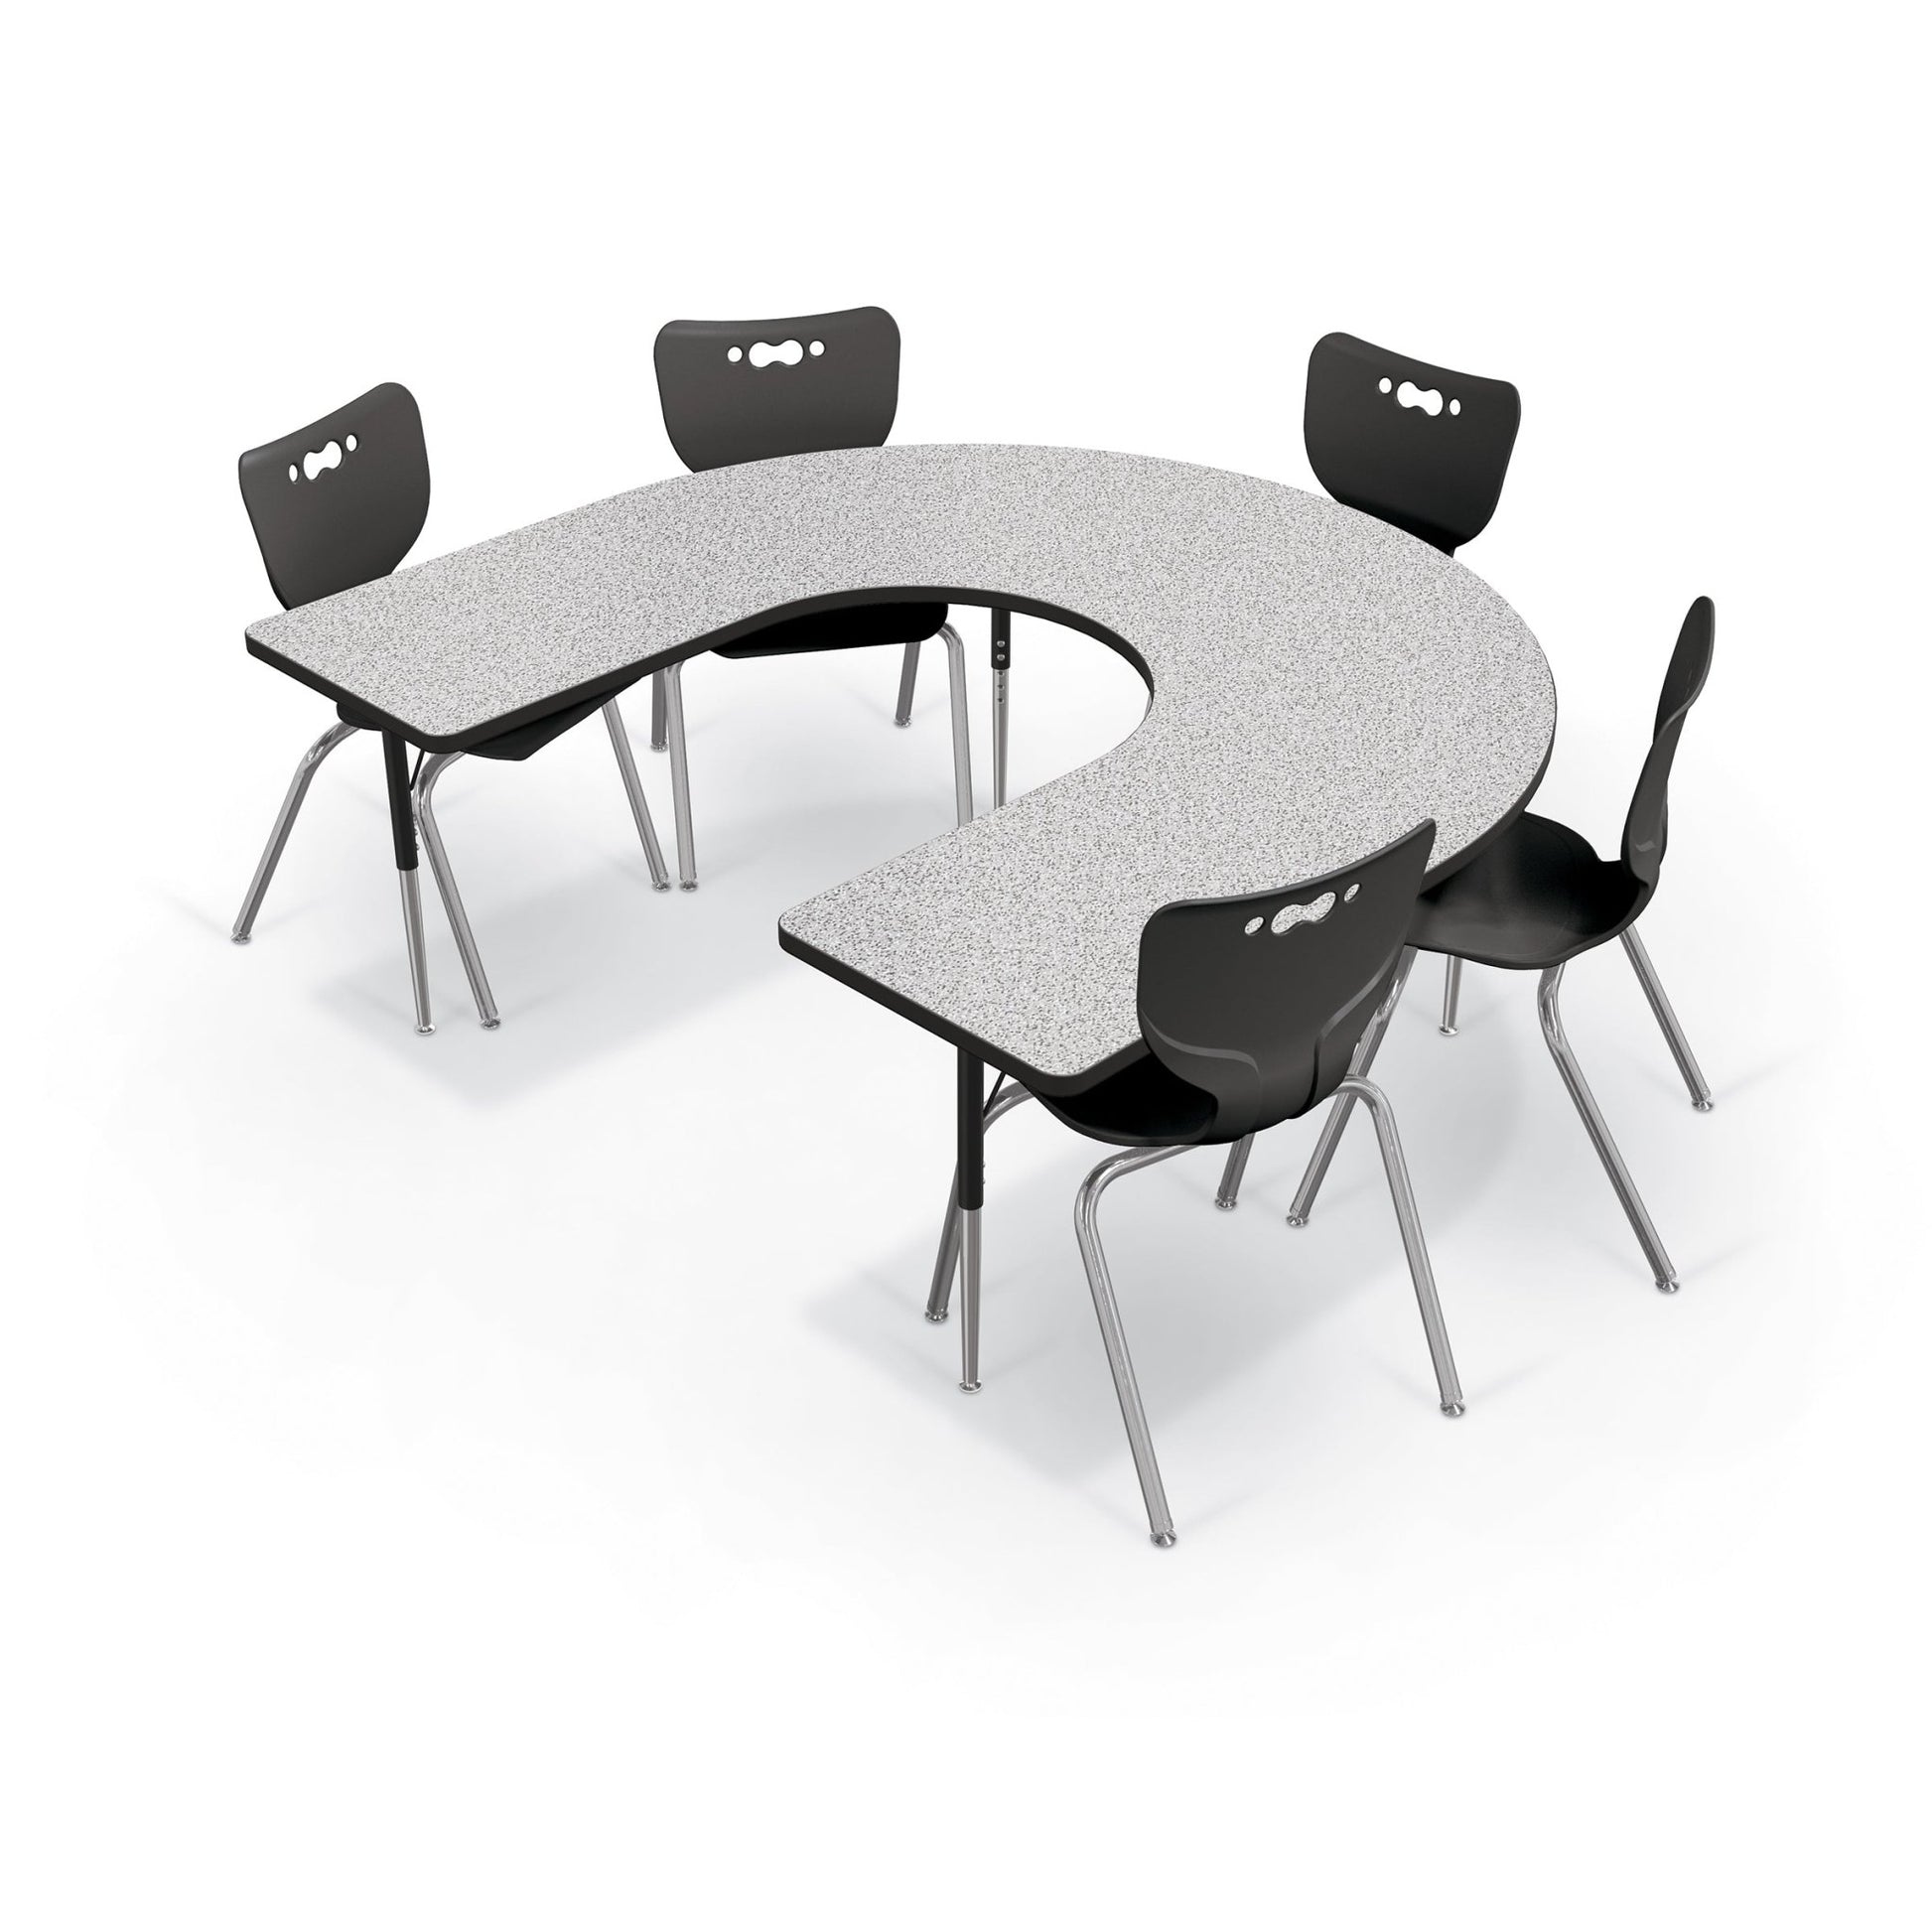 Mooreco Activity Table - 60"D x 66"W - Horseshoe - Black Edgeband (Mooreco 90527-W) - SchoolOutlet